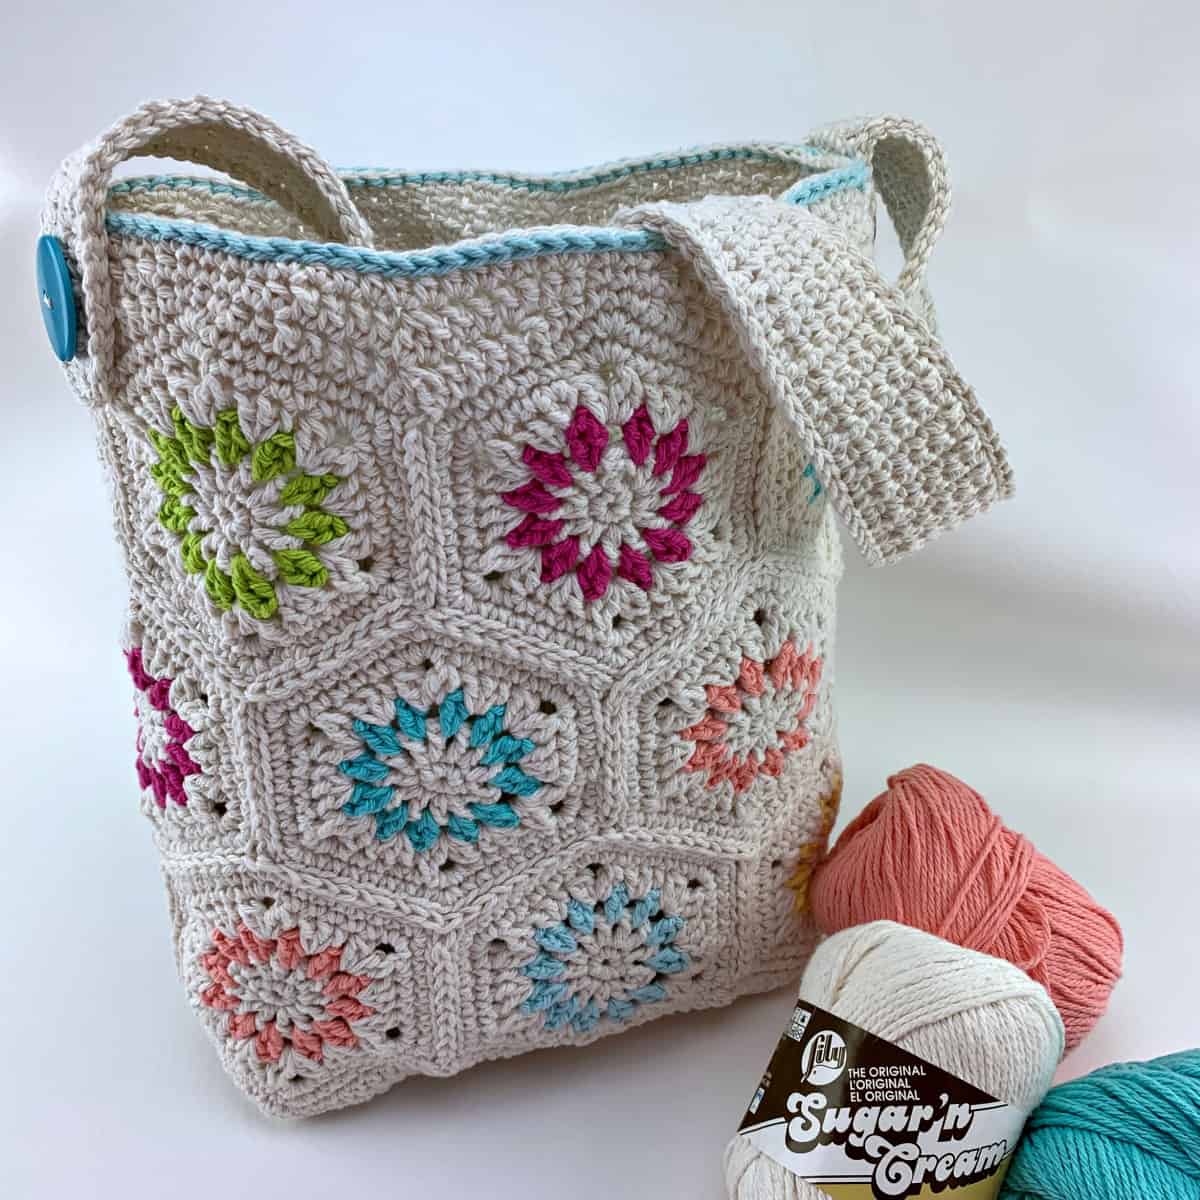 finished completed cross stitch scissors fob flower crochet border tassel l  blue